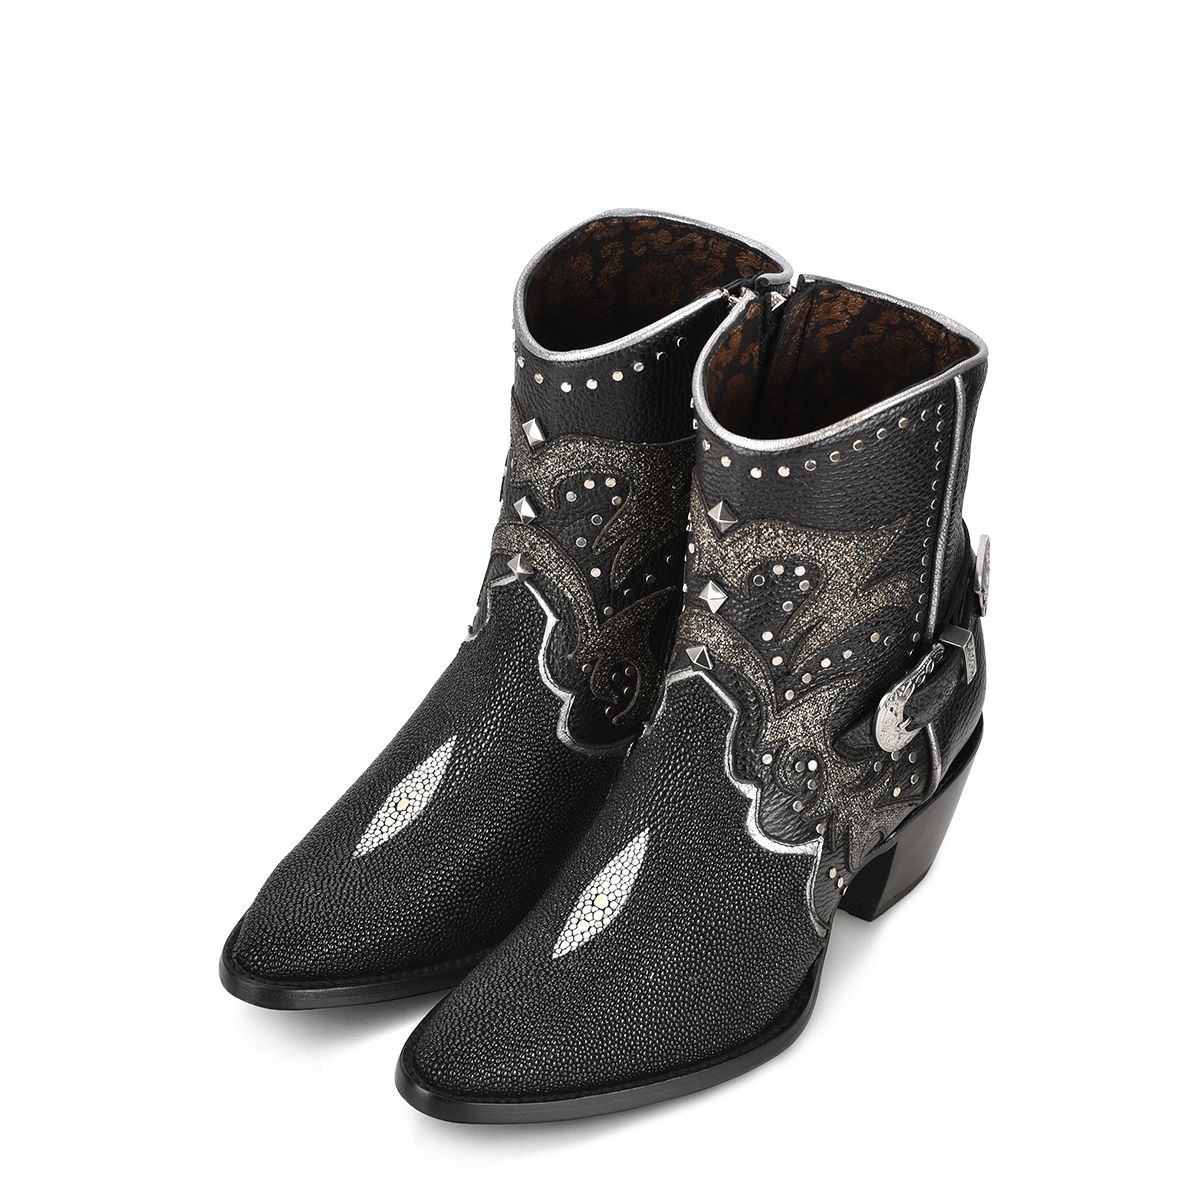 4A22MA - Cuadra black cowboy western stingray ankle boots for women-Kuet.us